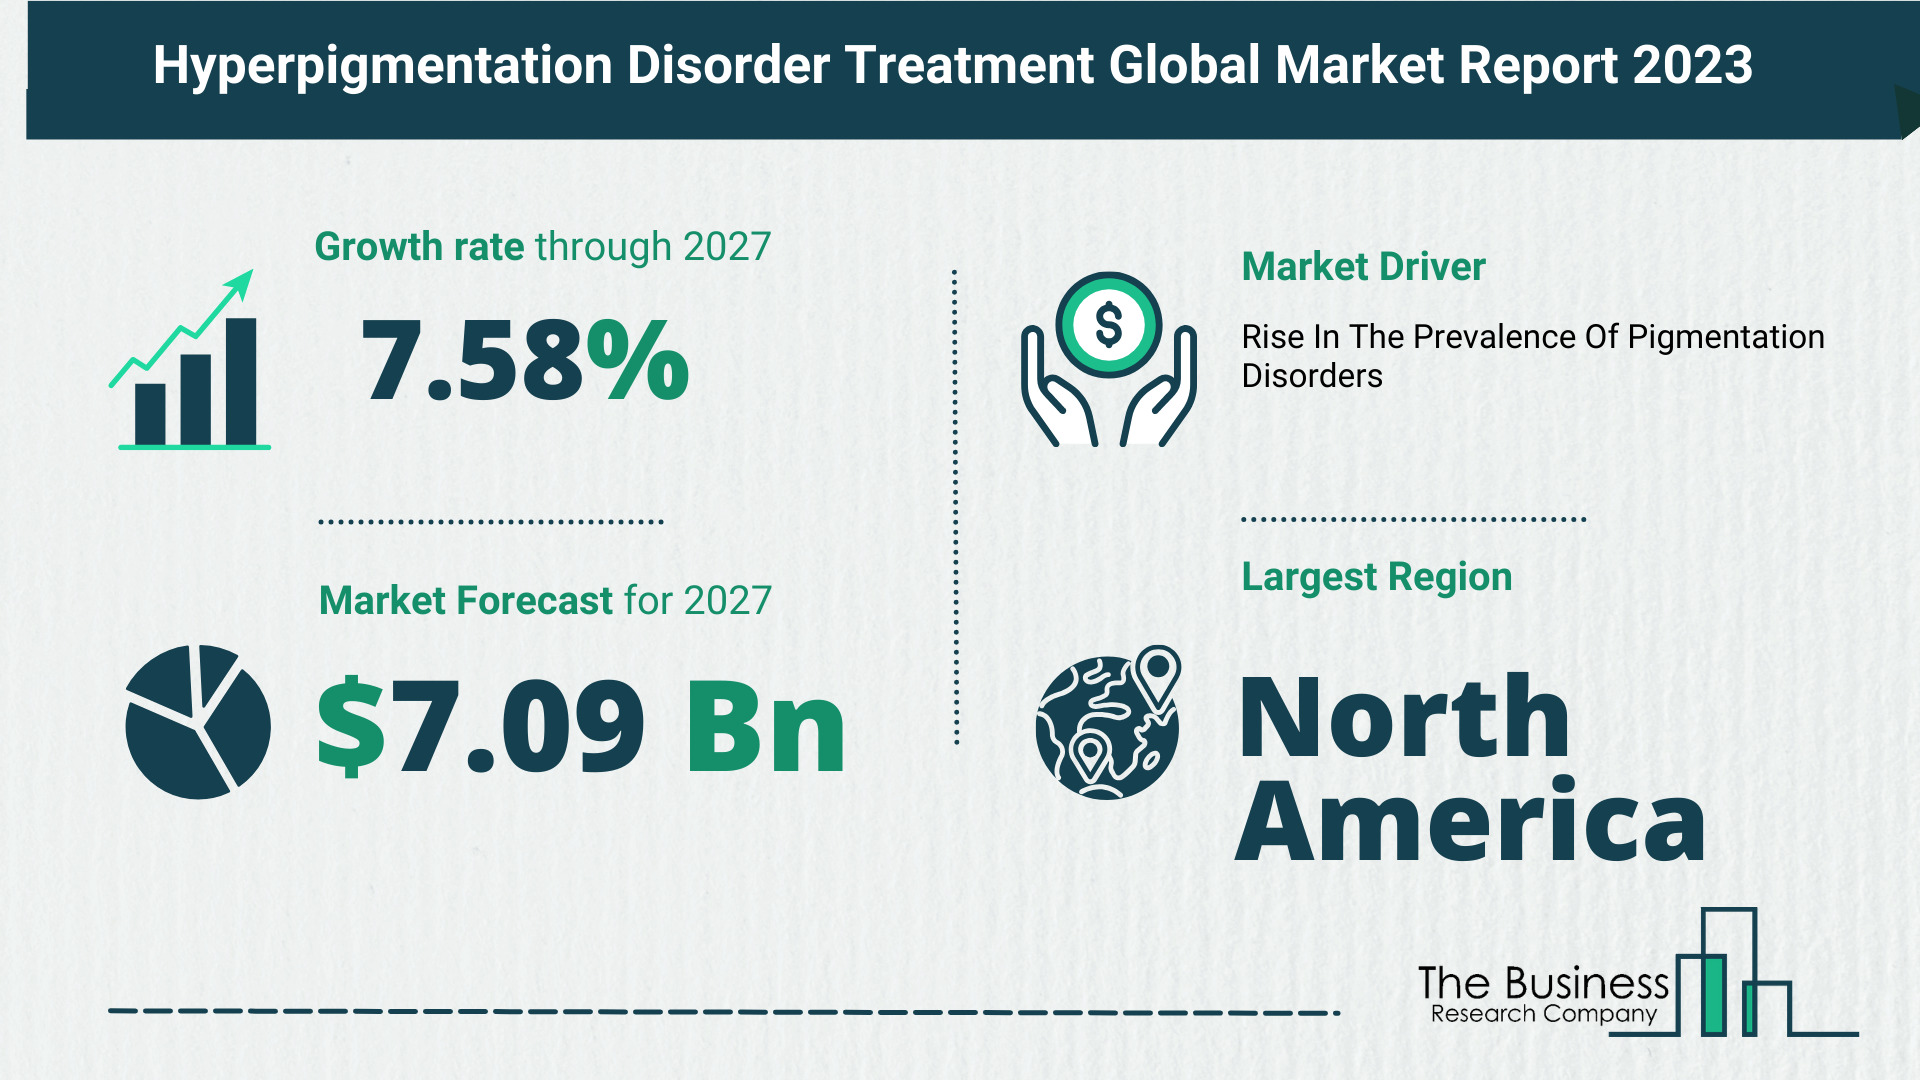 Global Hyperpigmentation Disorder Treatment Market